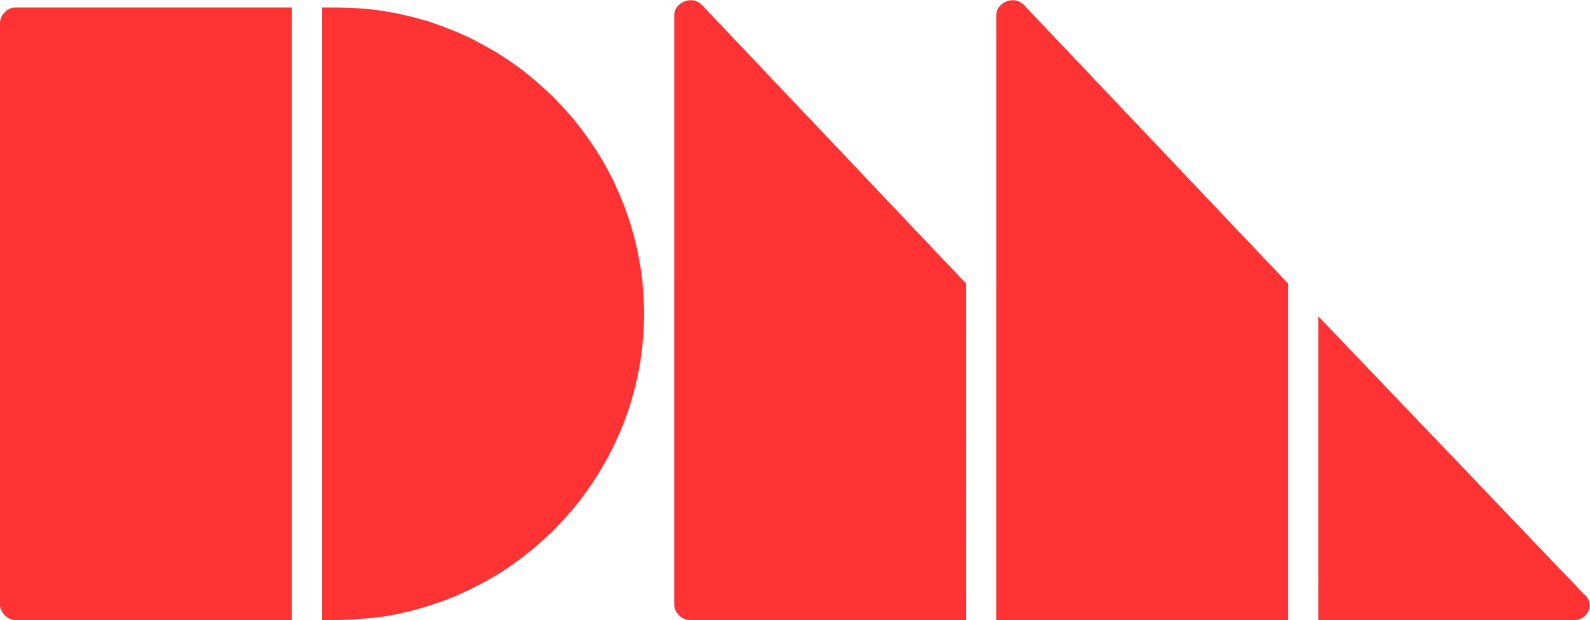 Desktop Metal logo (PNG transparent)